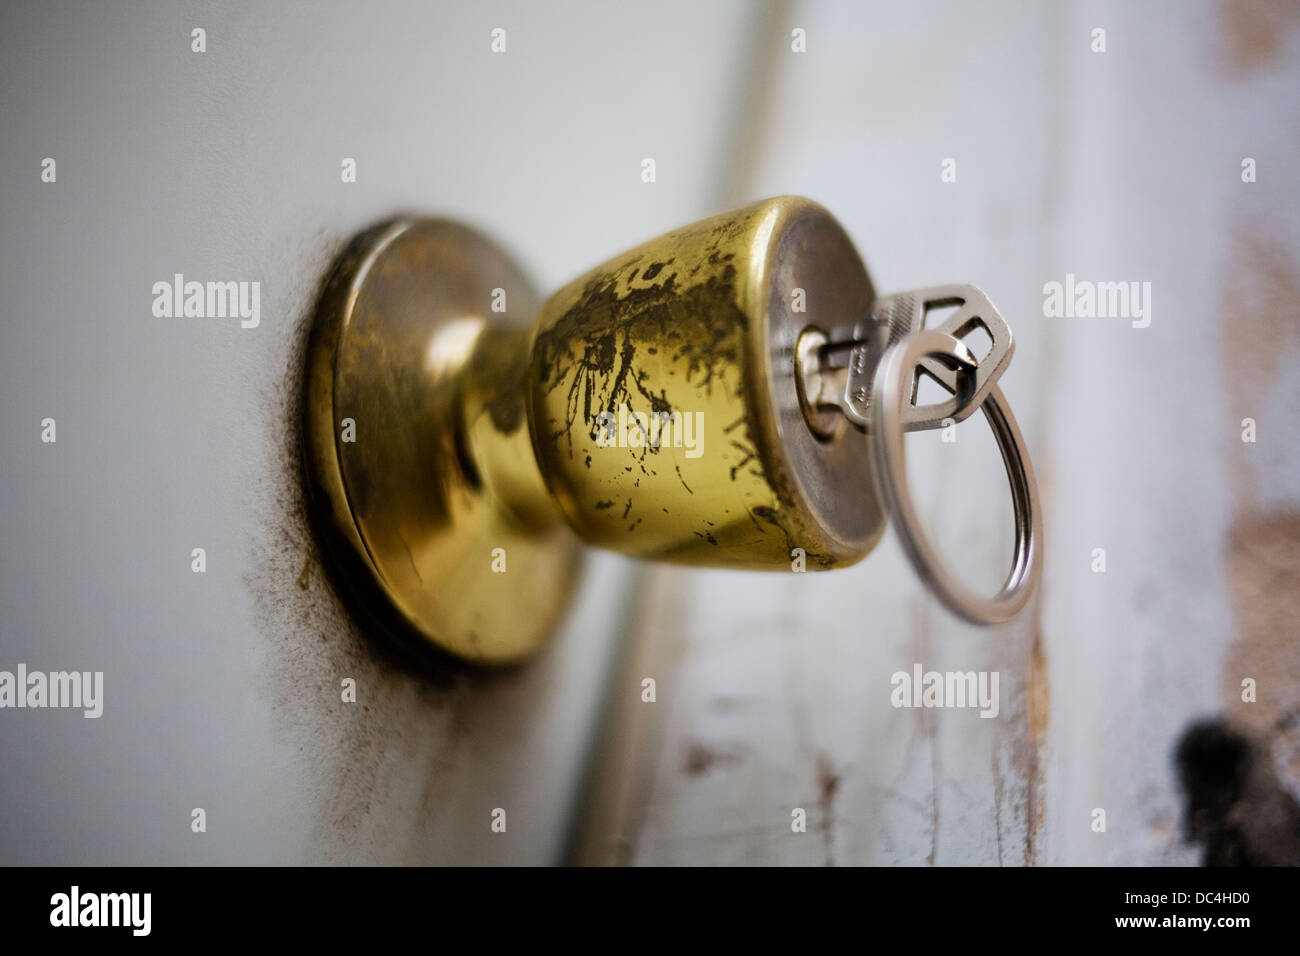 A key in a door lock. Stock Photo